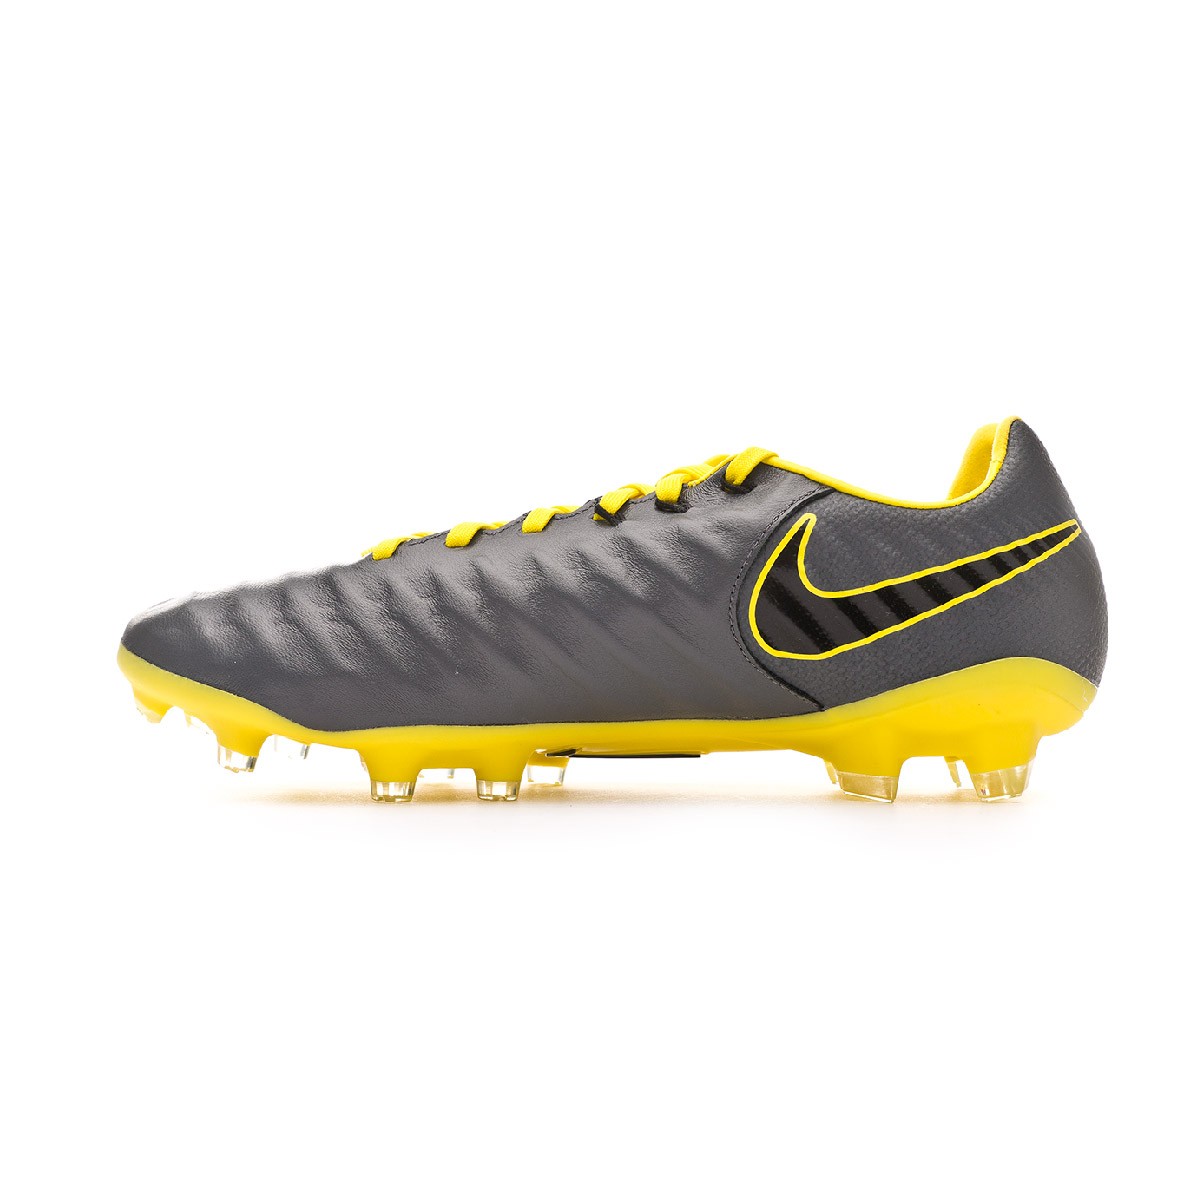 Bota de fútbol Nike Tiempo Legend VII Pro FG Dark grey-Black-Optical yellow  - Tienda de fútbol Fútbol Emotion